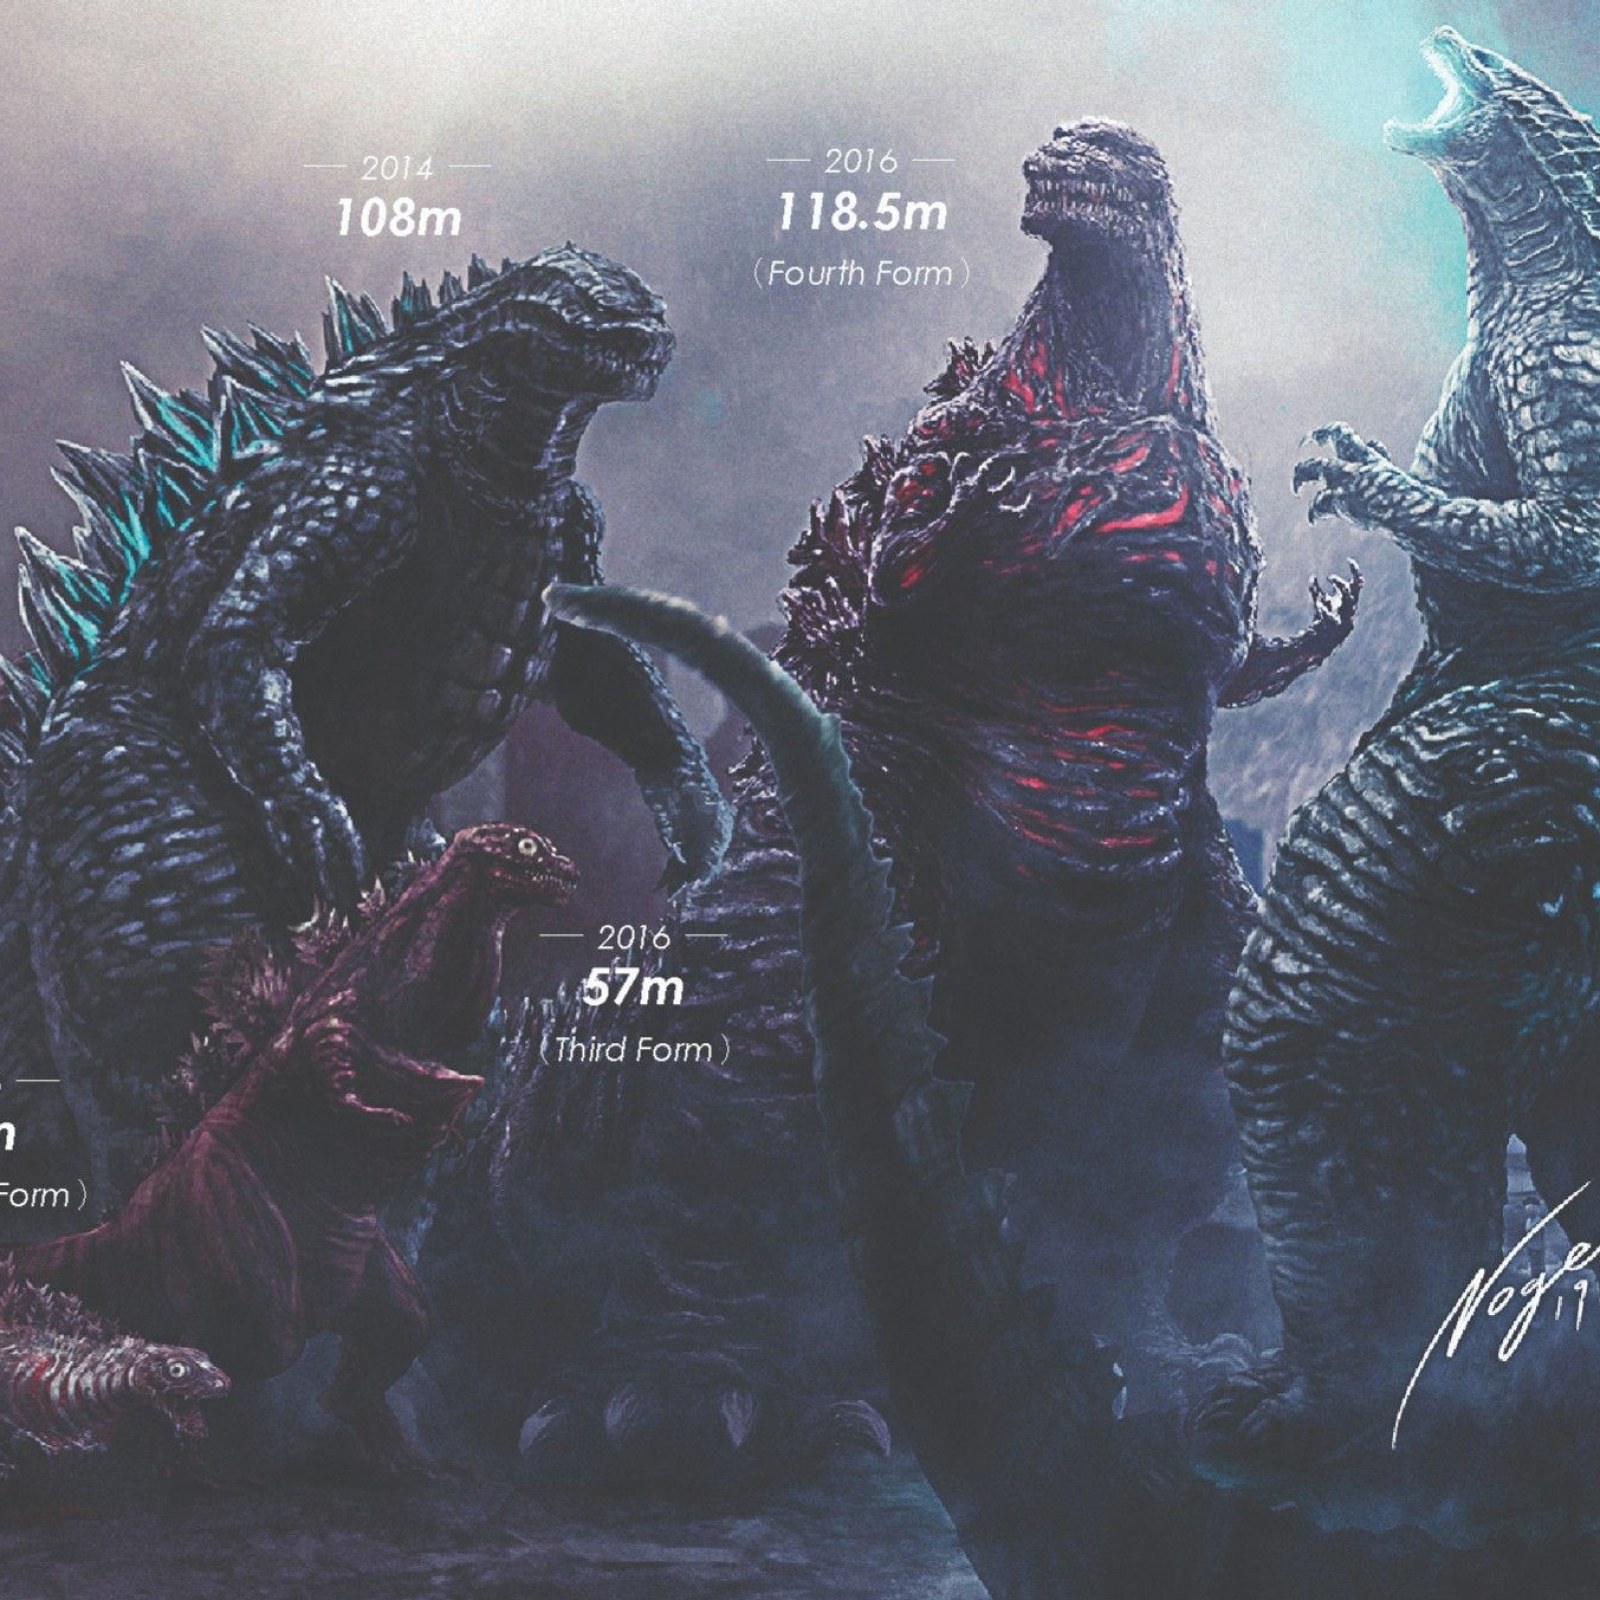 Godzilla All Monsters, King Godzilla